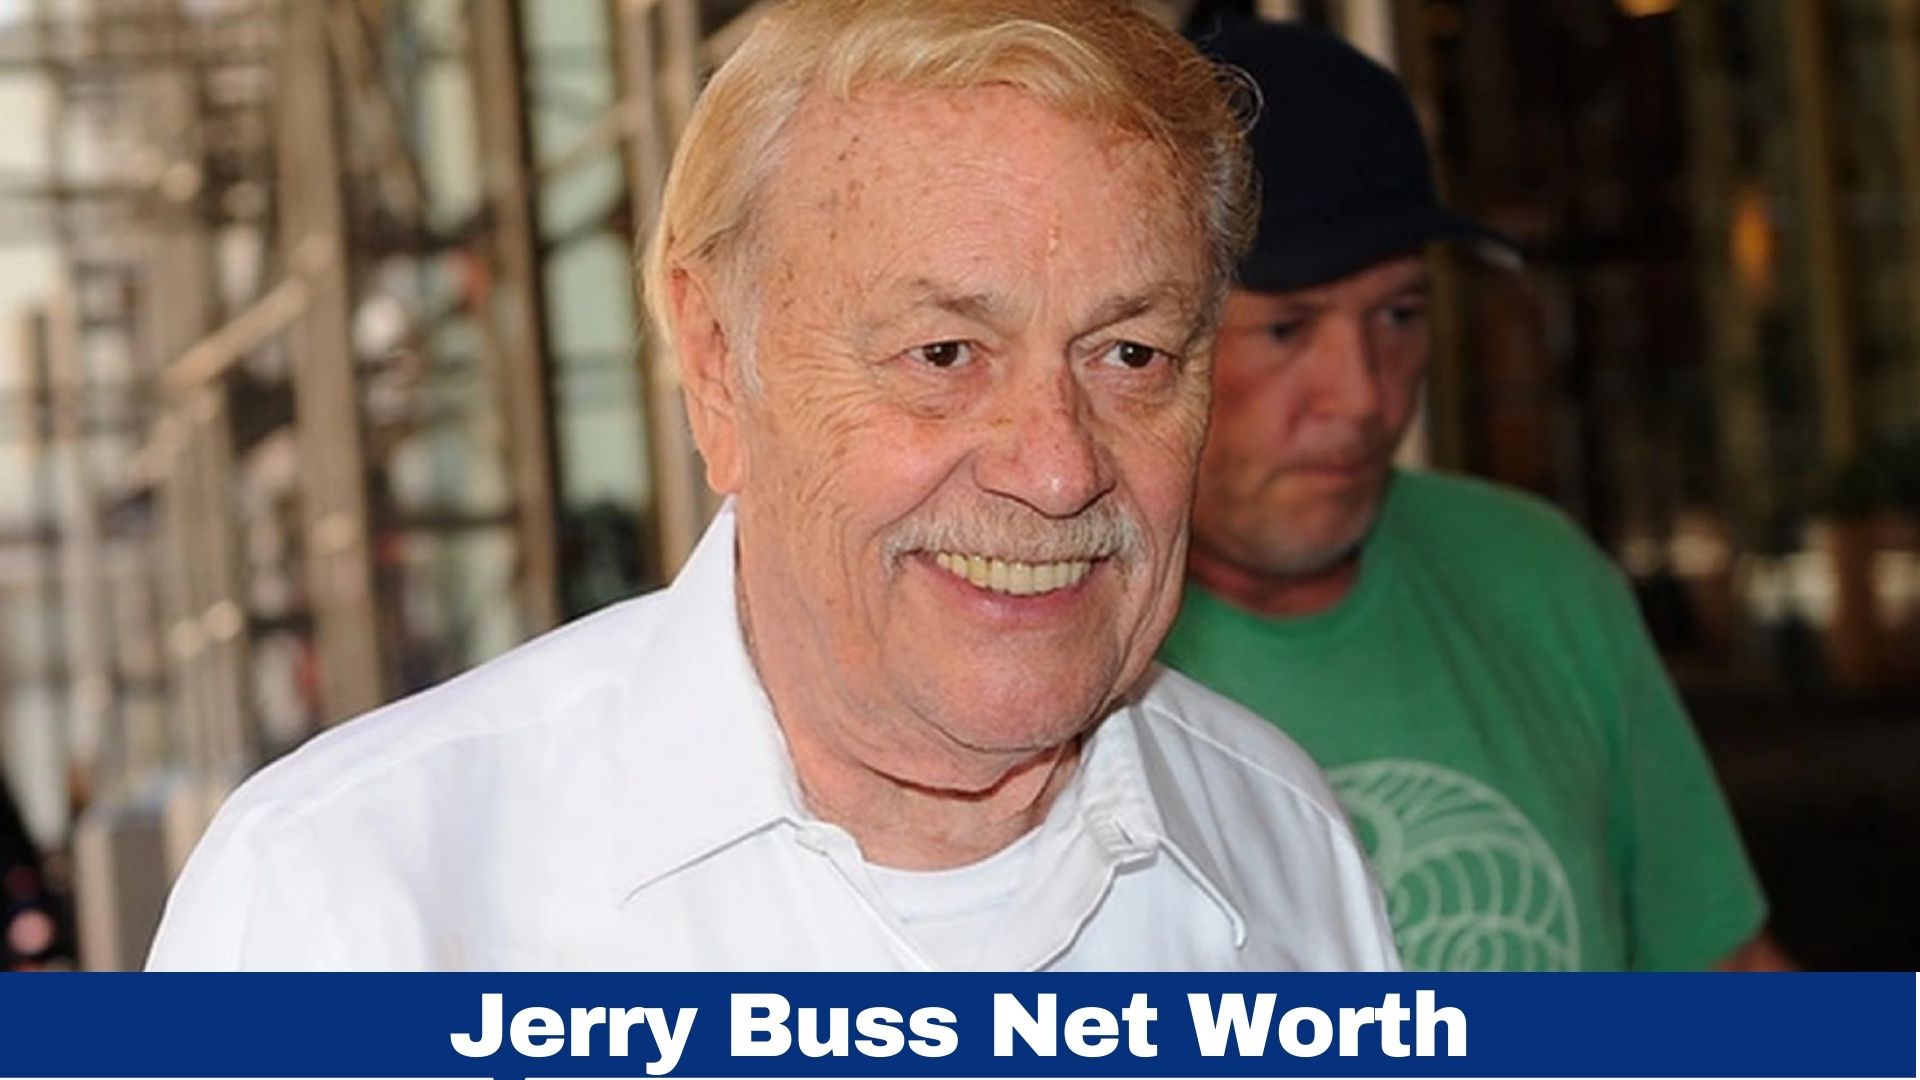 Jerry buss